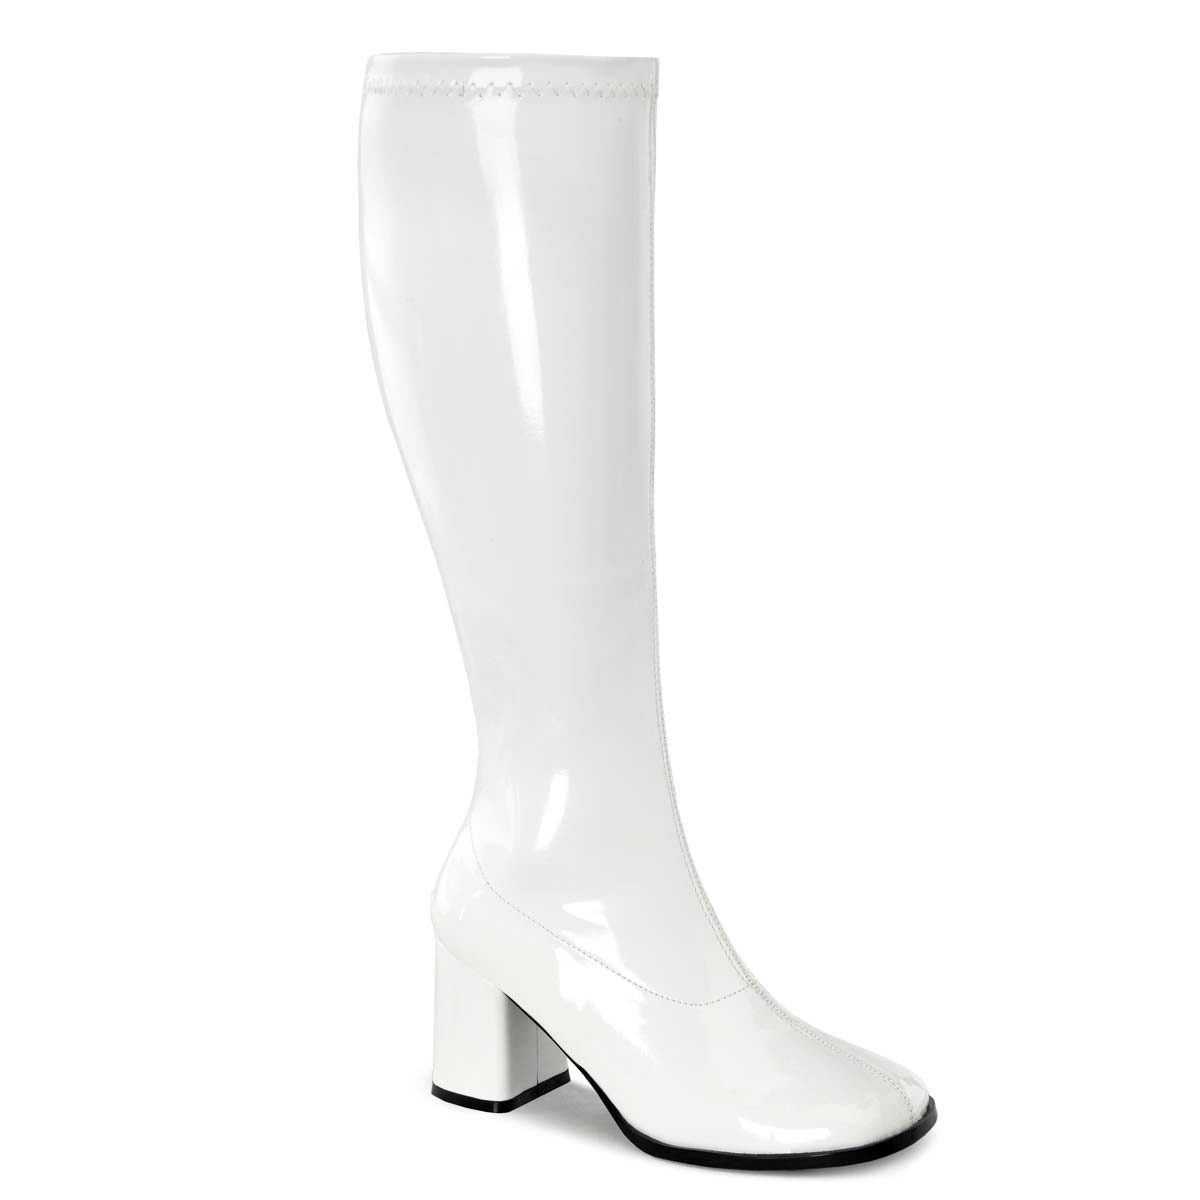 Pleaser Funtasma Gogo-300Wc - White Stretch Patent in Sexy Boots - $57.19